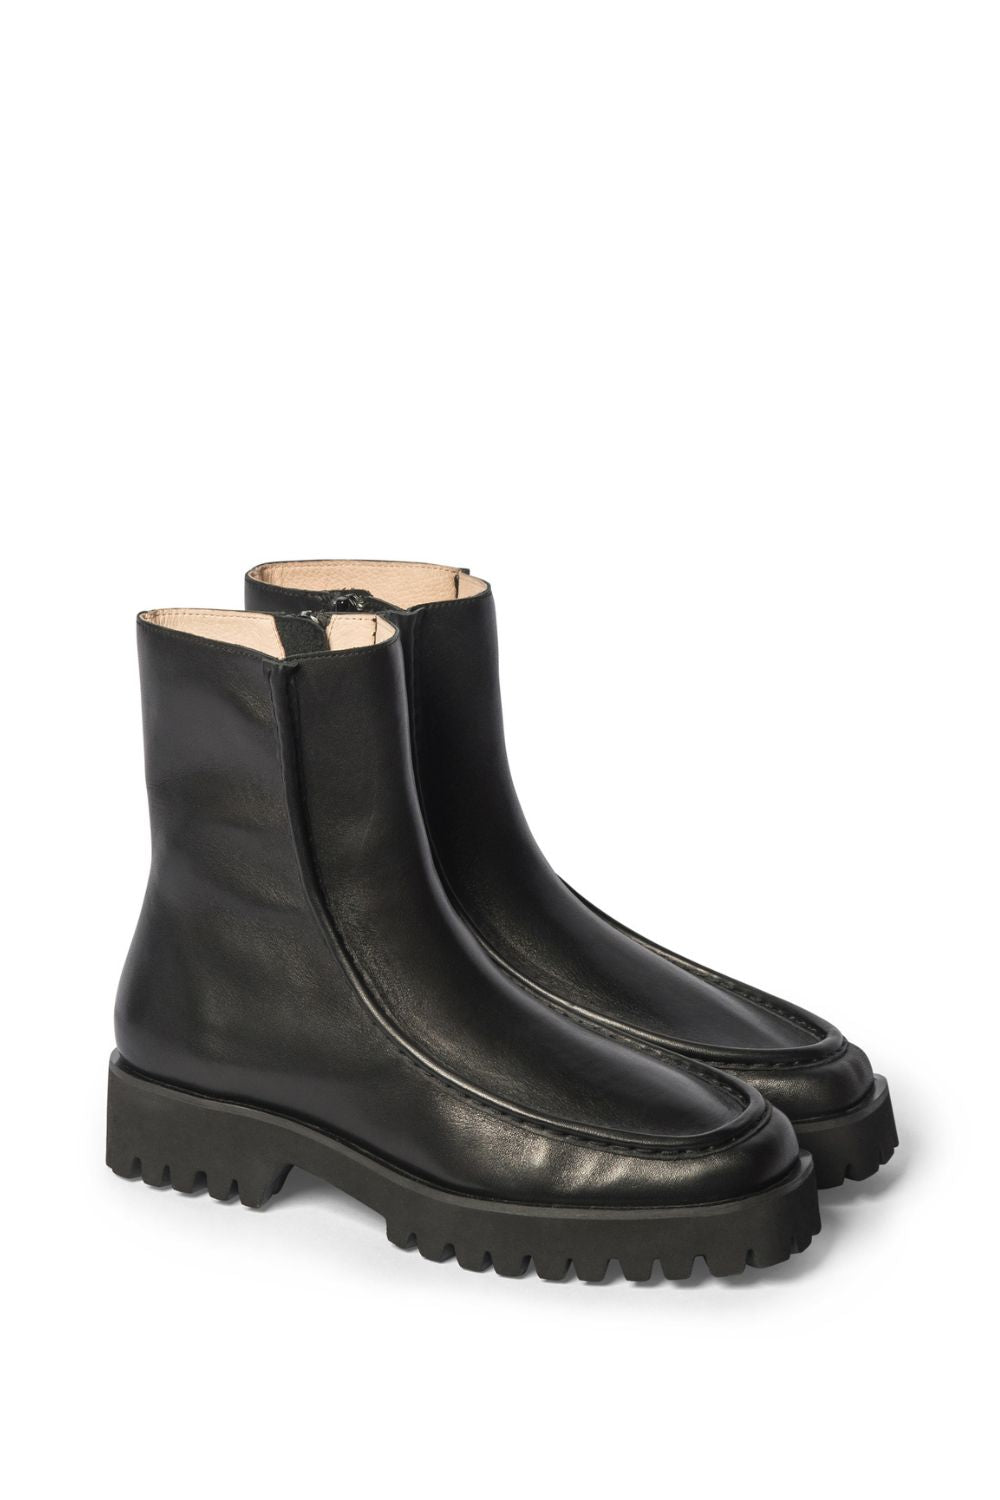 Notion boot - black